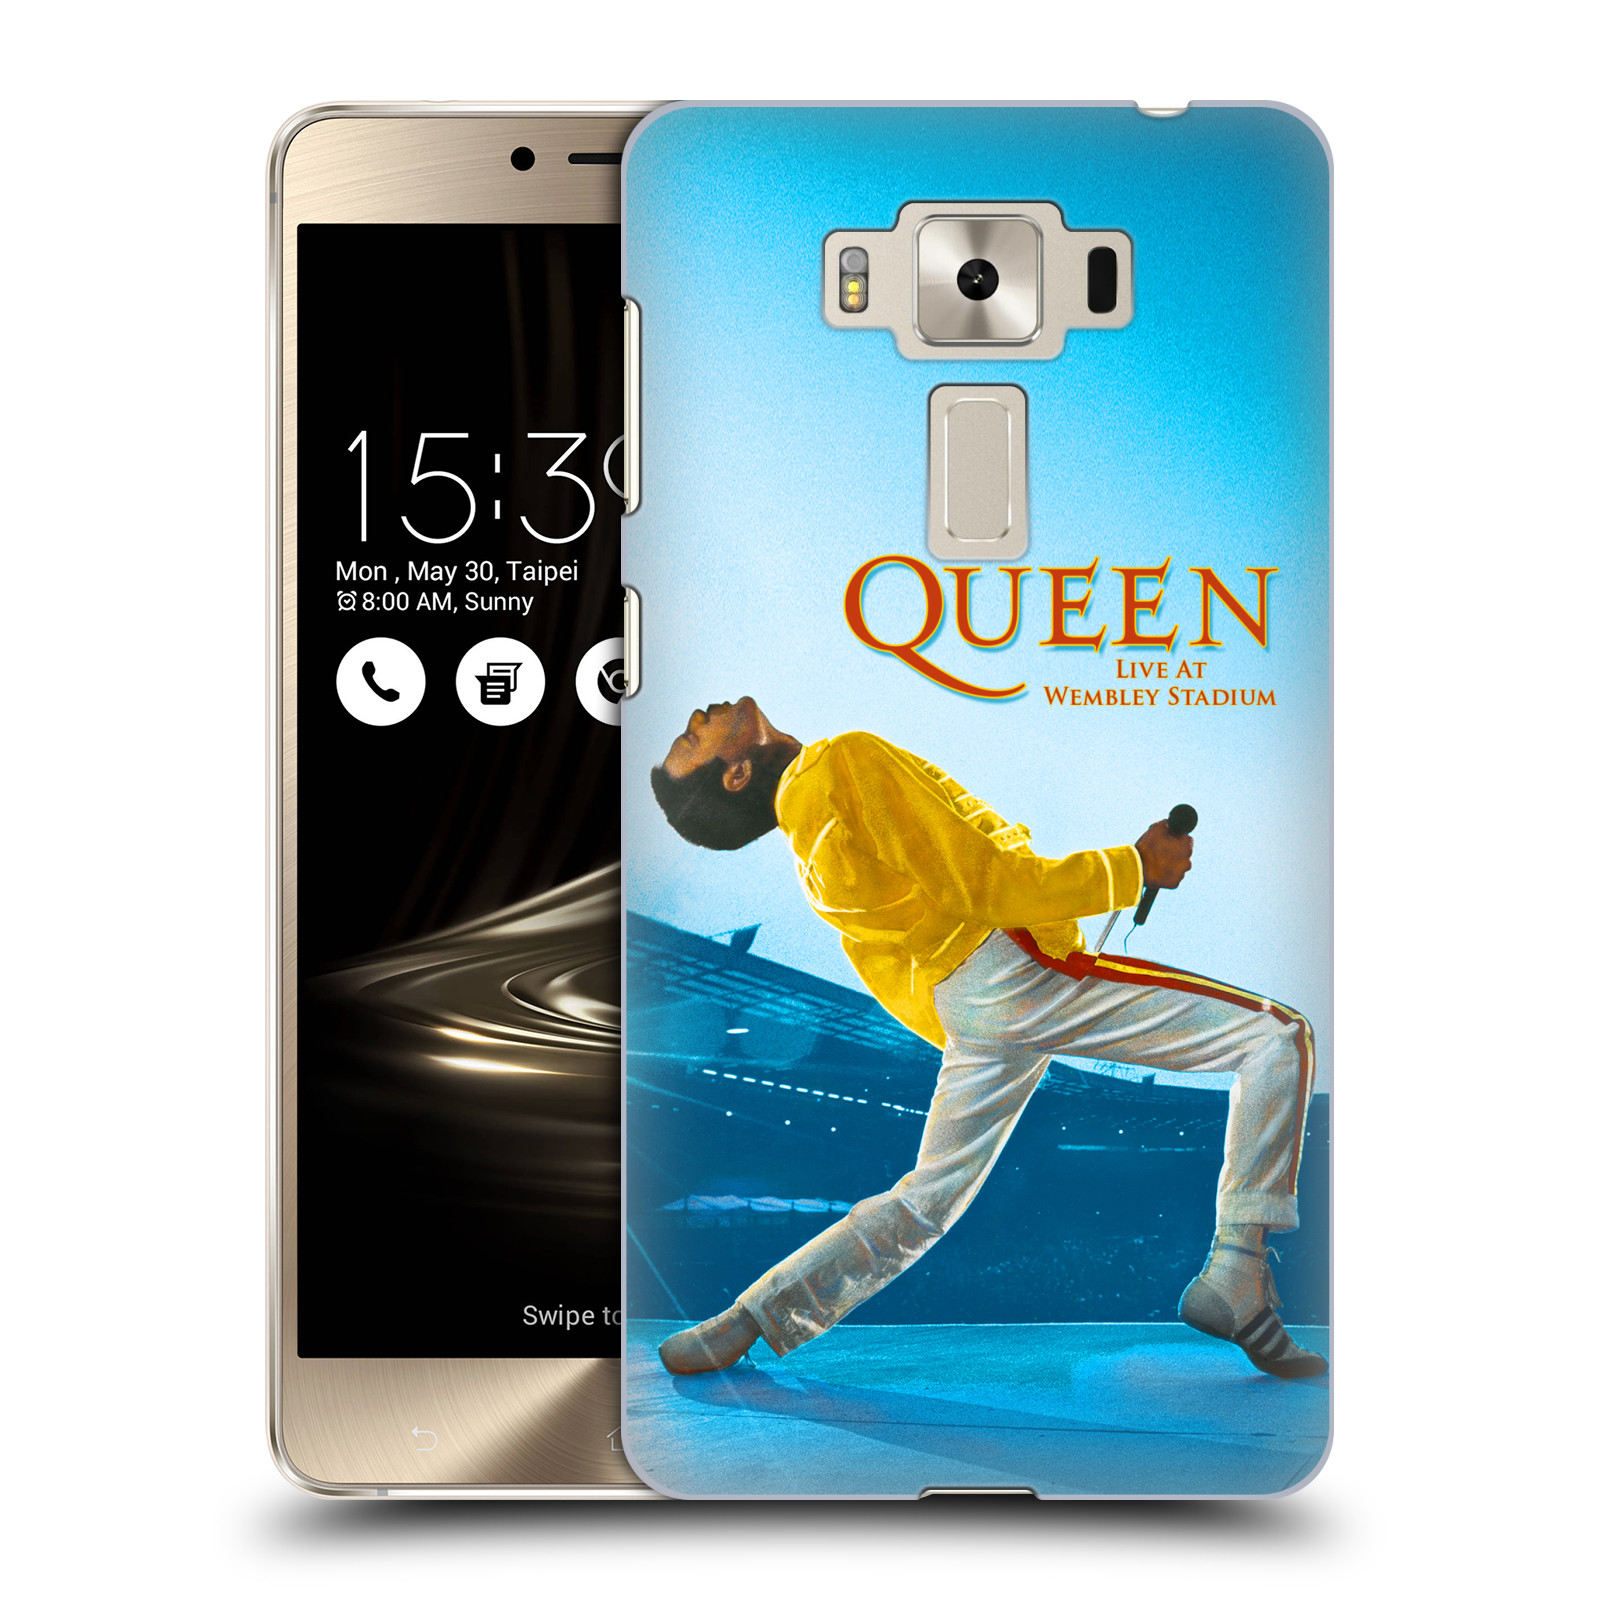 HEAD CASE plastový obal na mobil Asus Zenfone 3 DELUXE ZS550KL zpěvák Queen skupina Freddie Mercury